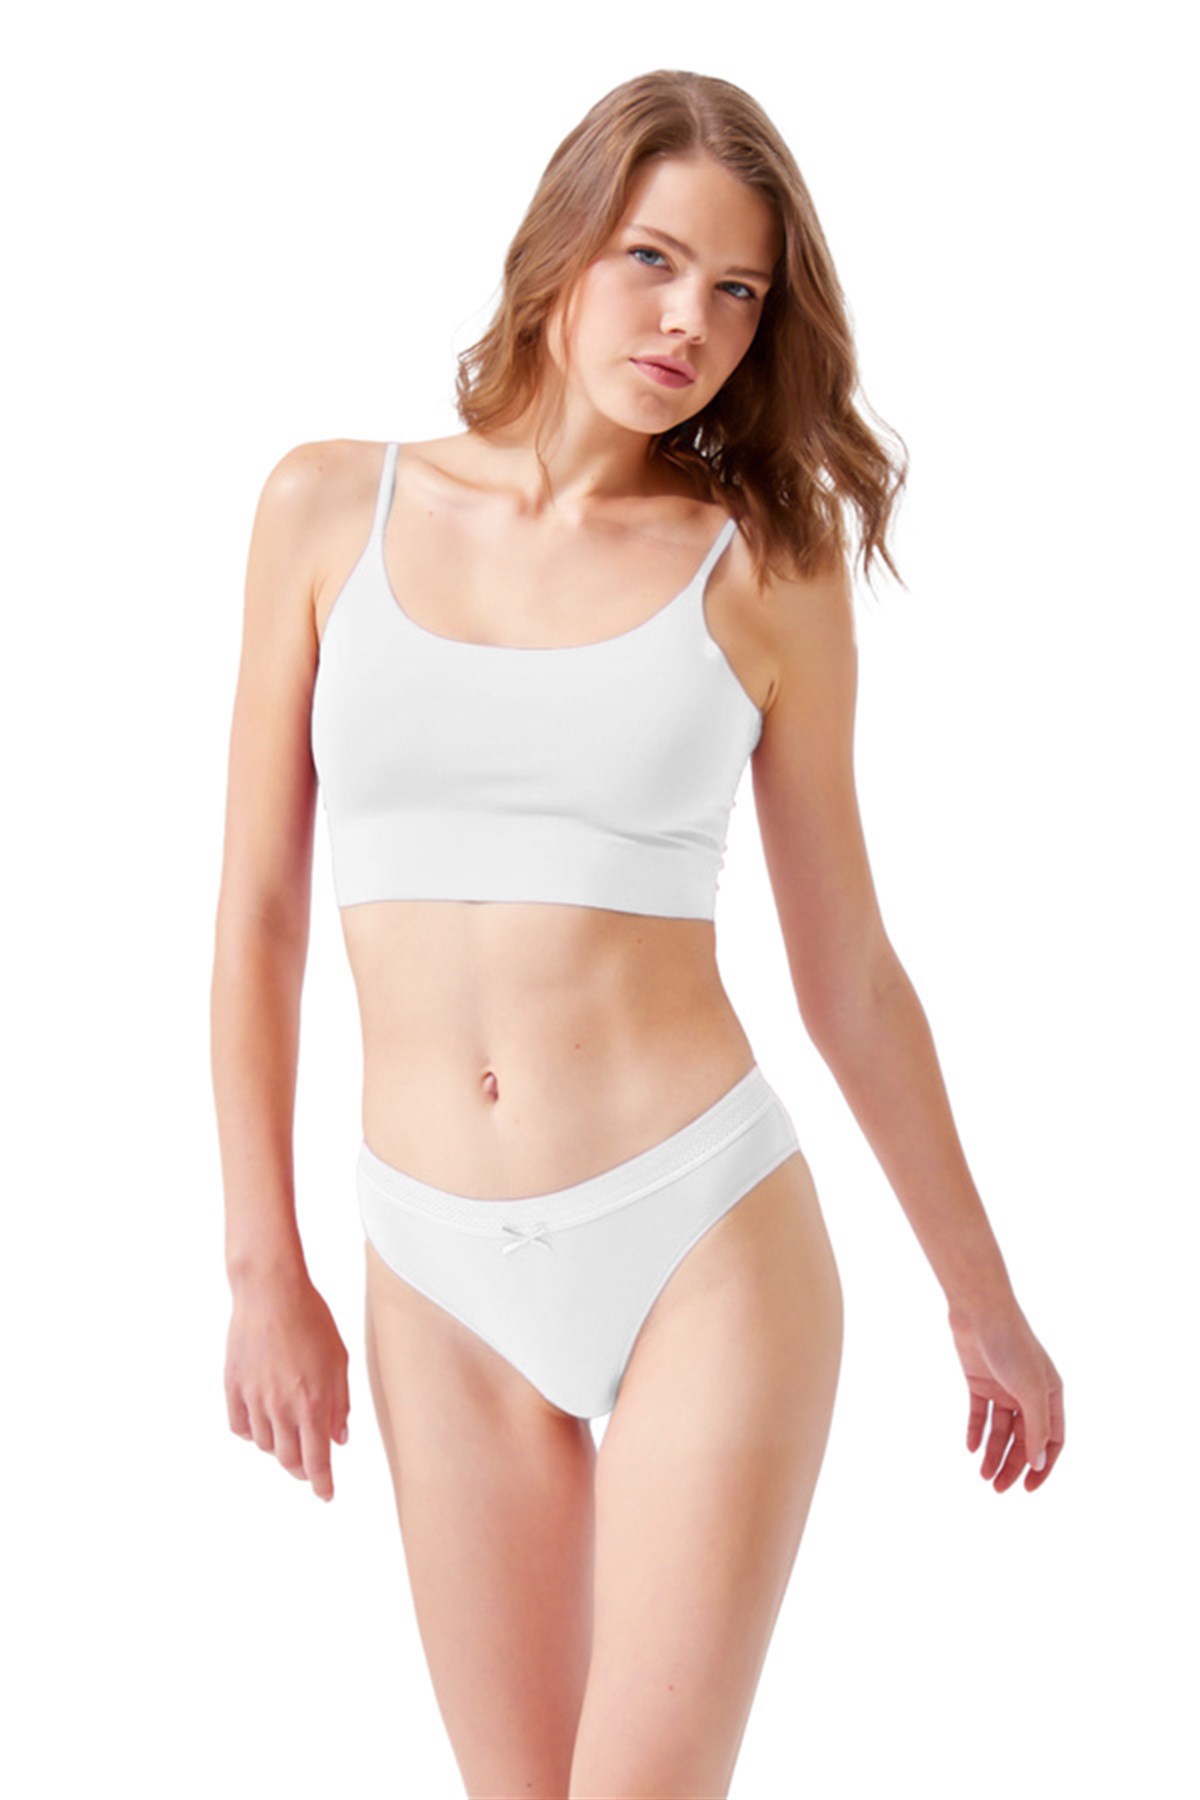 basic-sport-cotton-brazilian-women-panty-with-net-designed-elastic-waistband-ch0336-white-1-3